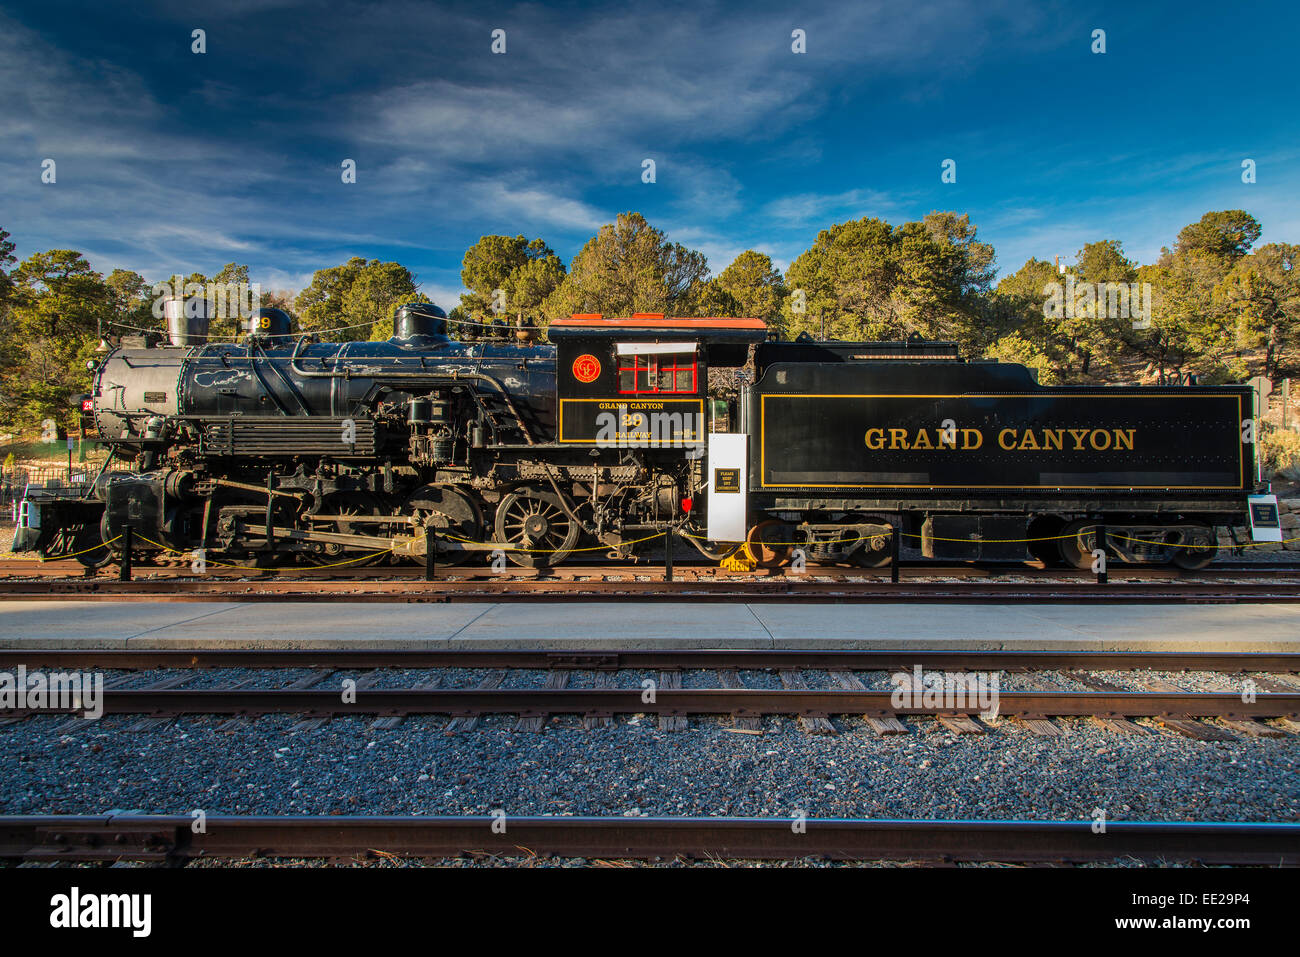 Grand canyon Railway GCRX Engine 29 steam locomotive at Grand Canyon Depot railway station, Arizona, USA Stock Photo